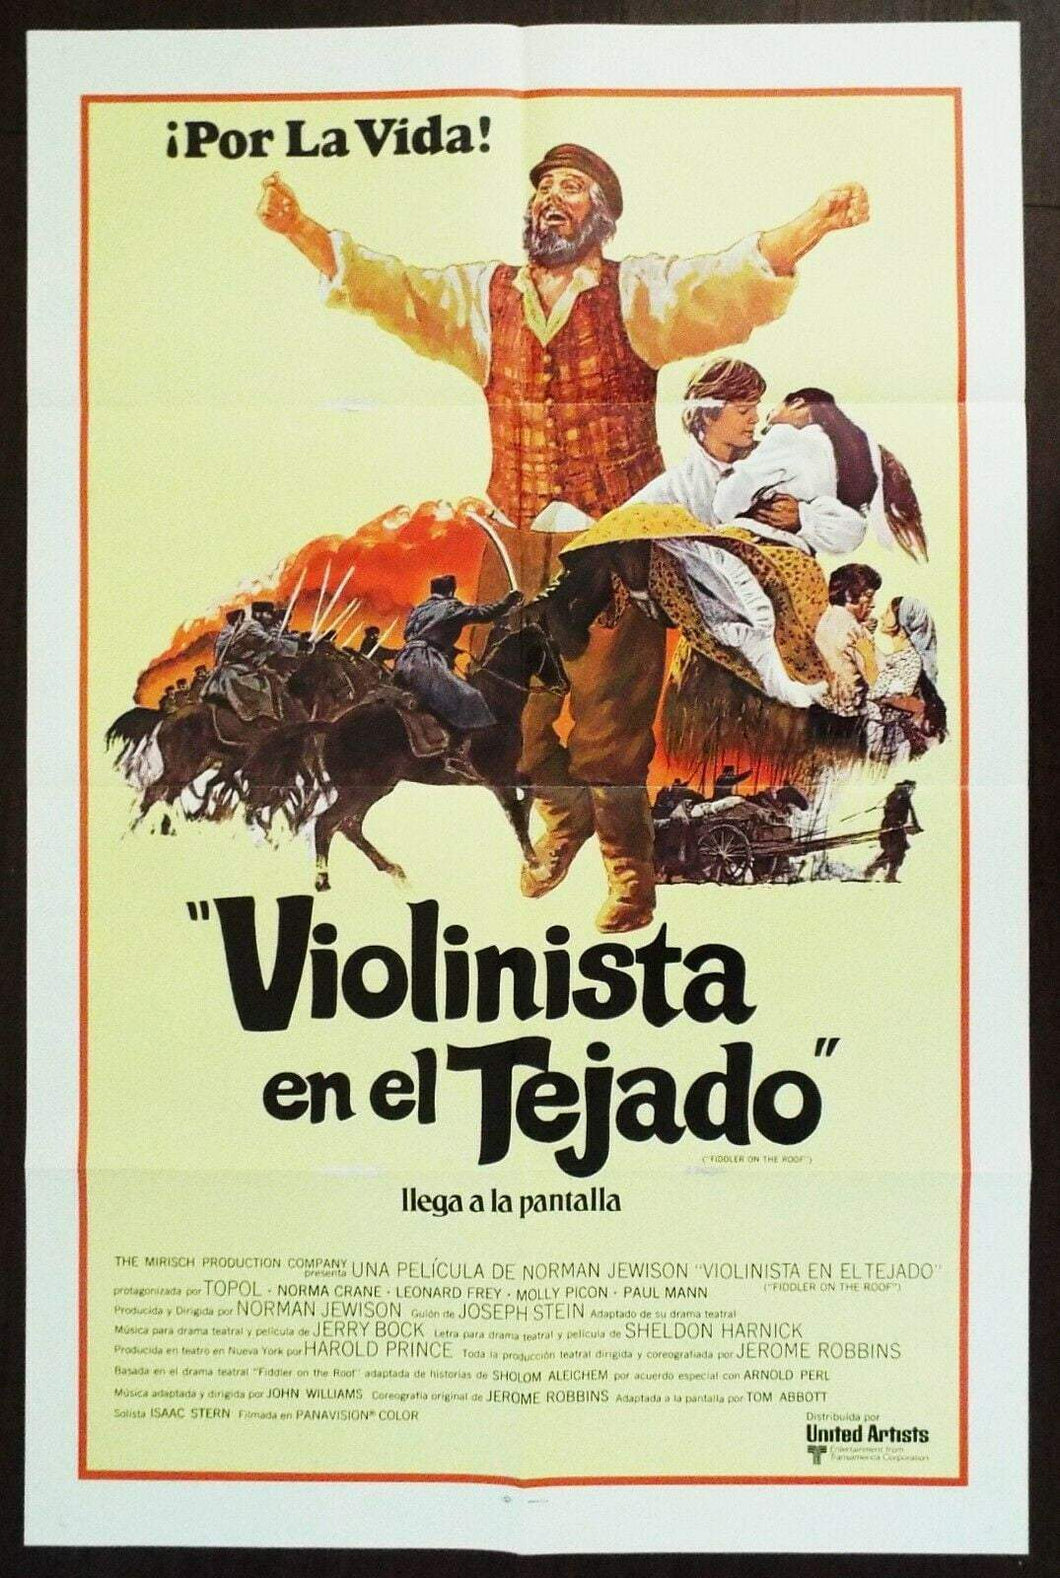 Fiddler on the Roof (Spanish) - Printed Originals